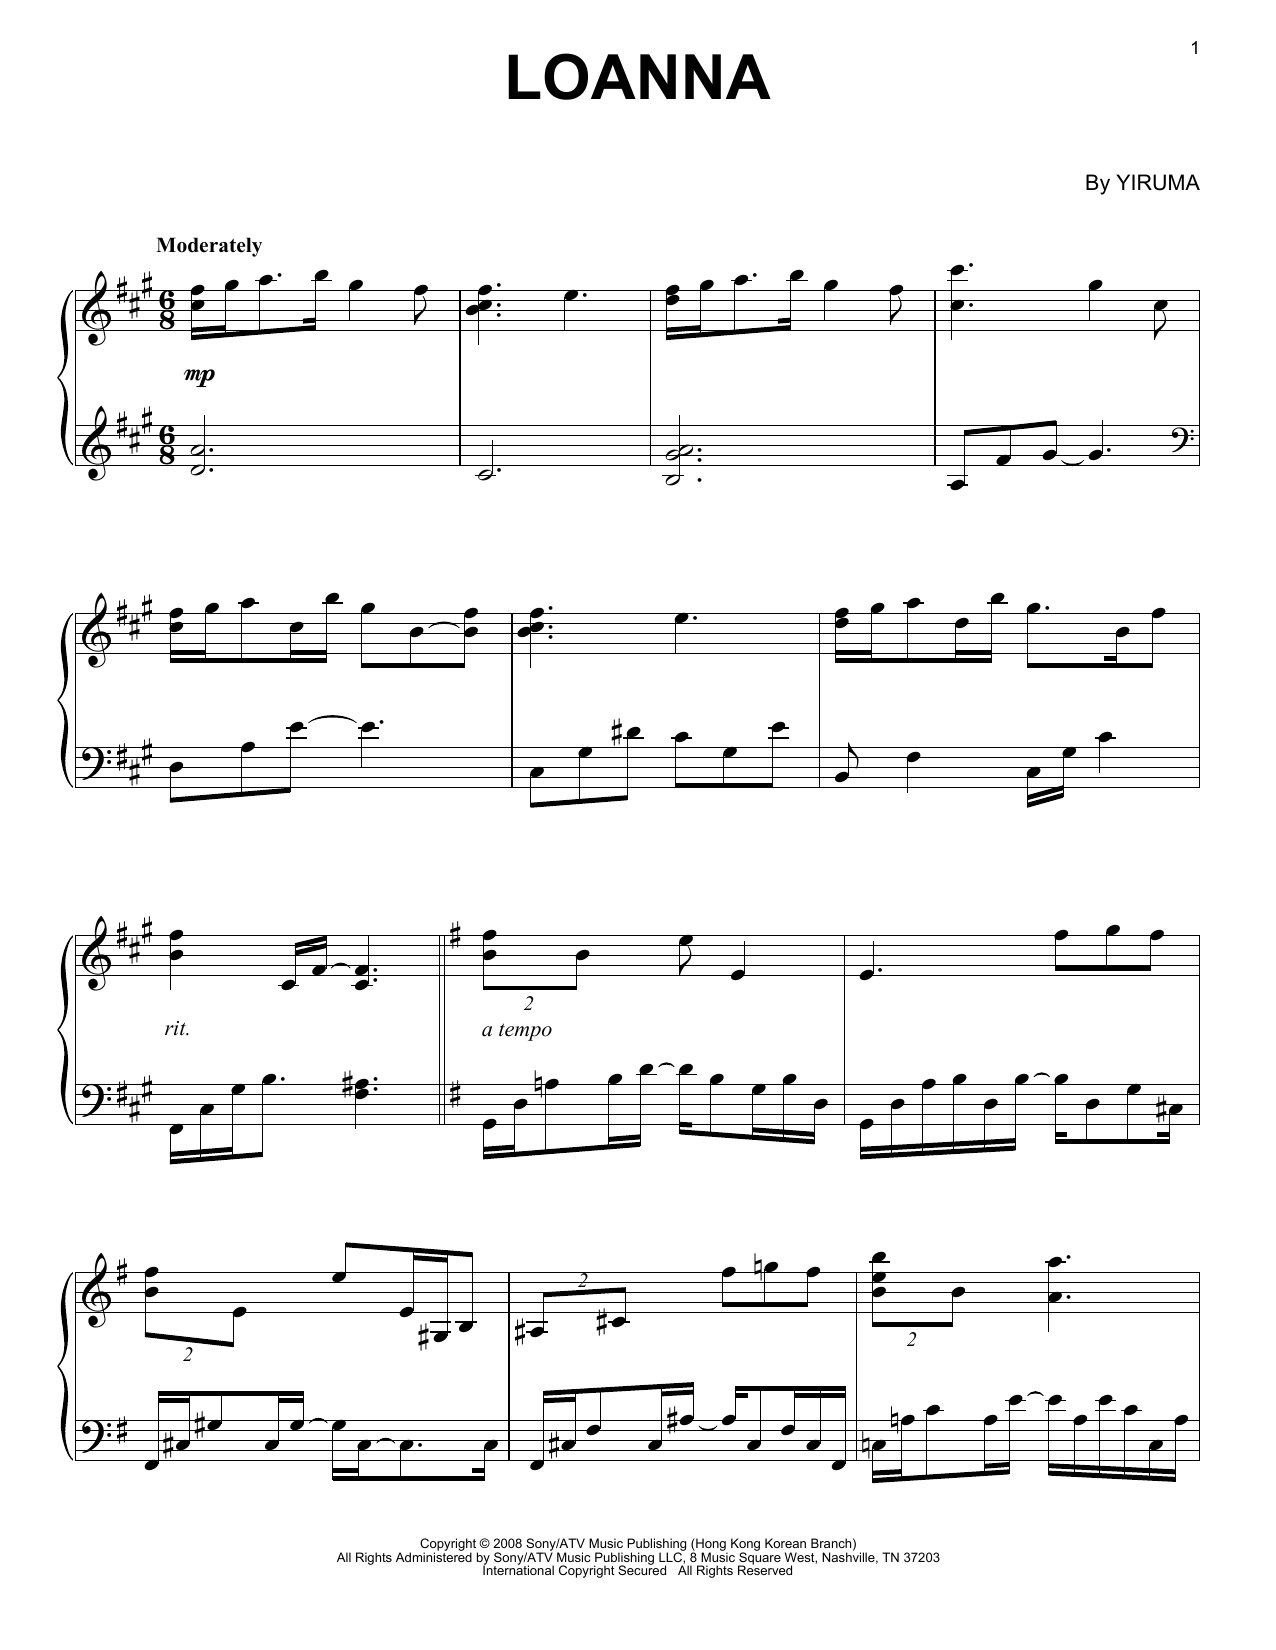 Yiruma Loanna Sheet Music Notes & Chords for Piano - Download or Print PDF